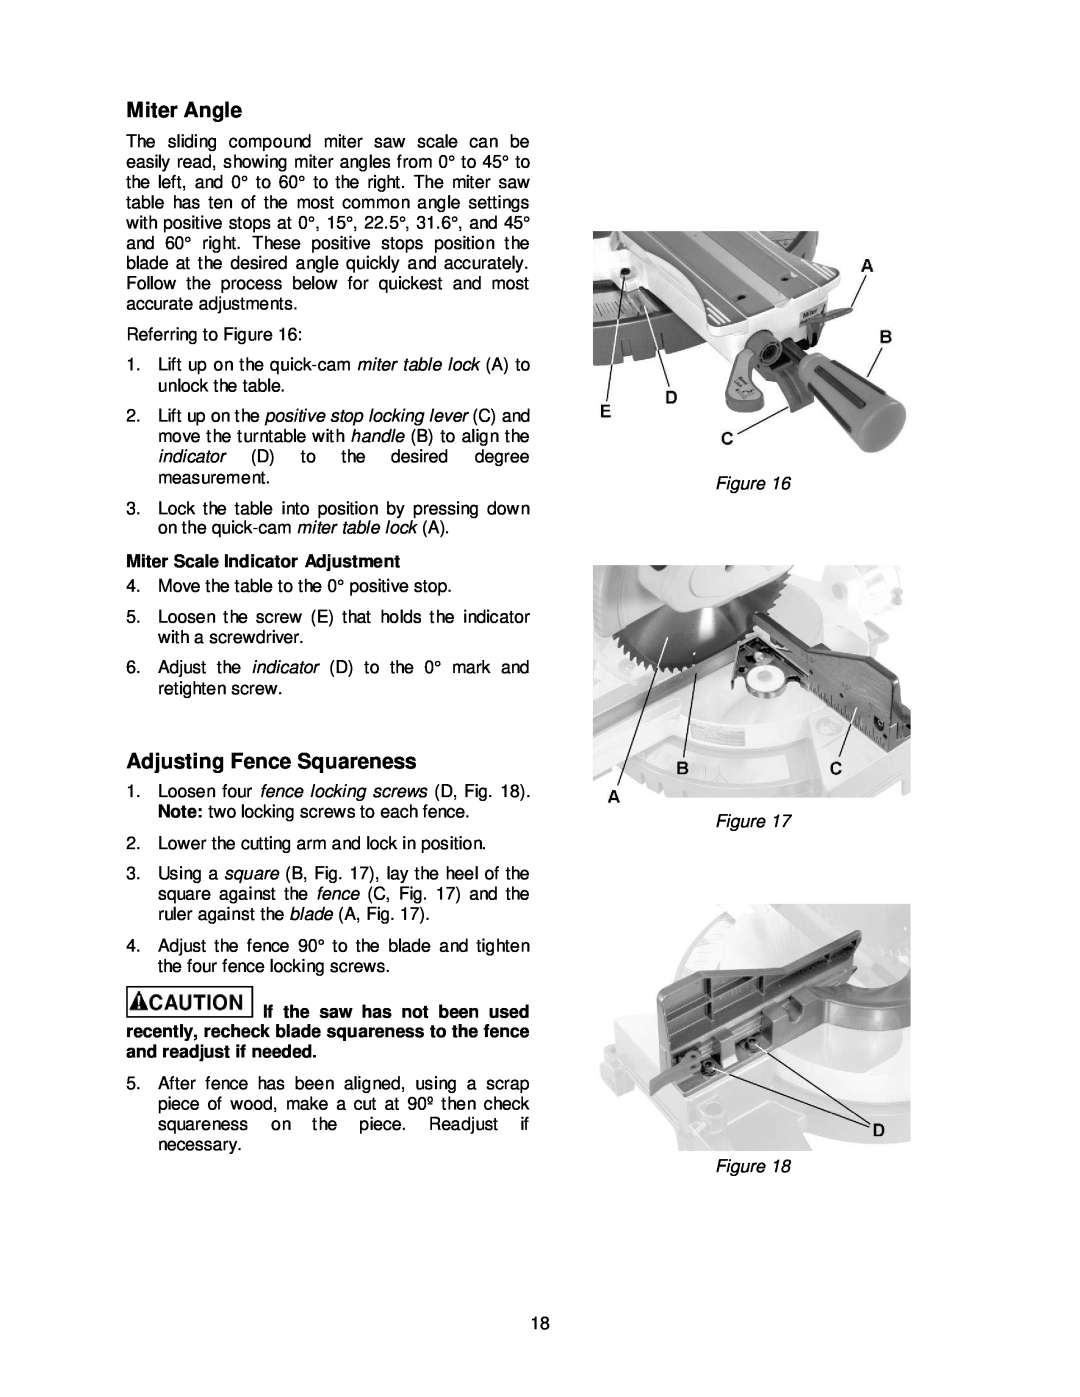 Jet Tools JMS-12SCMS manual Miter Angle, Adjusting Fence Squareness, Miter Scale Indicator Adjustment 